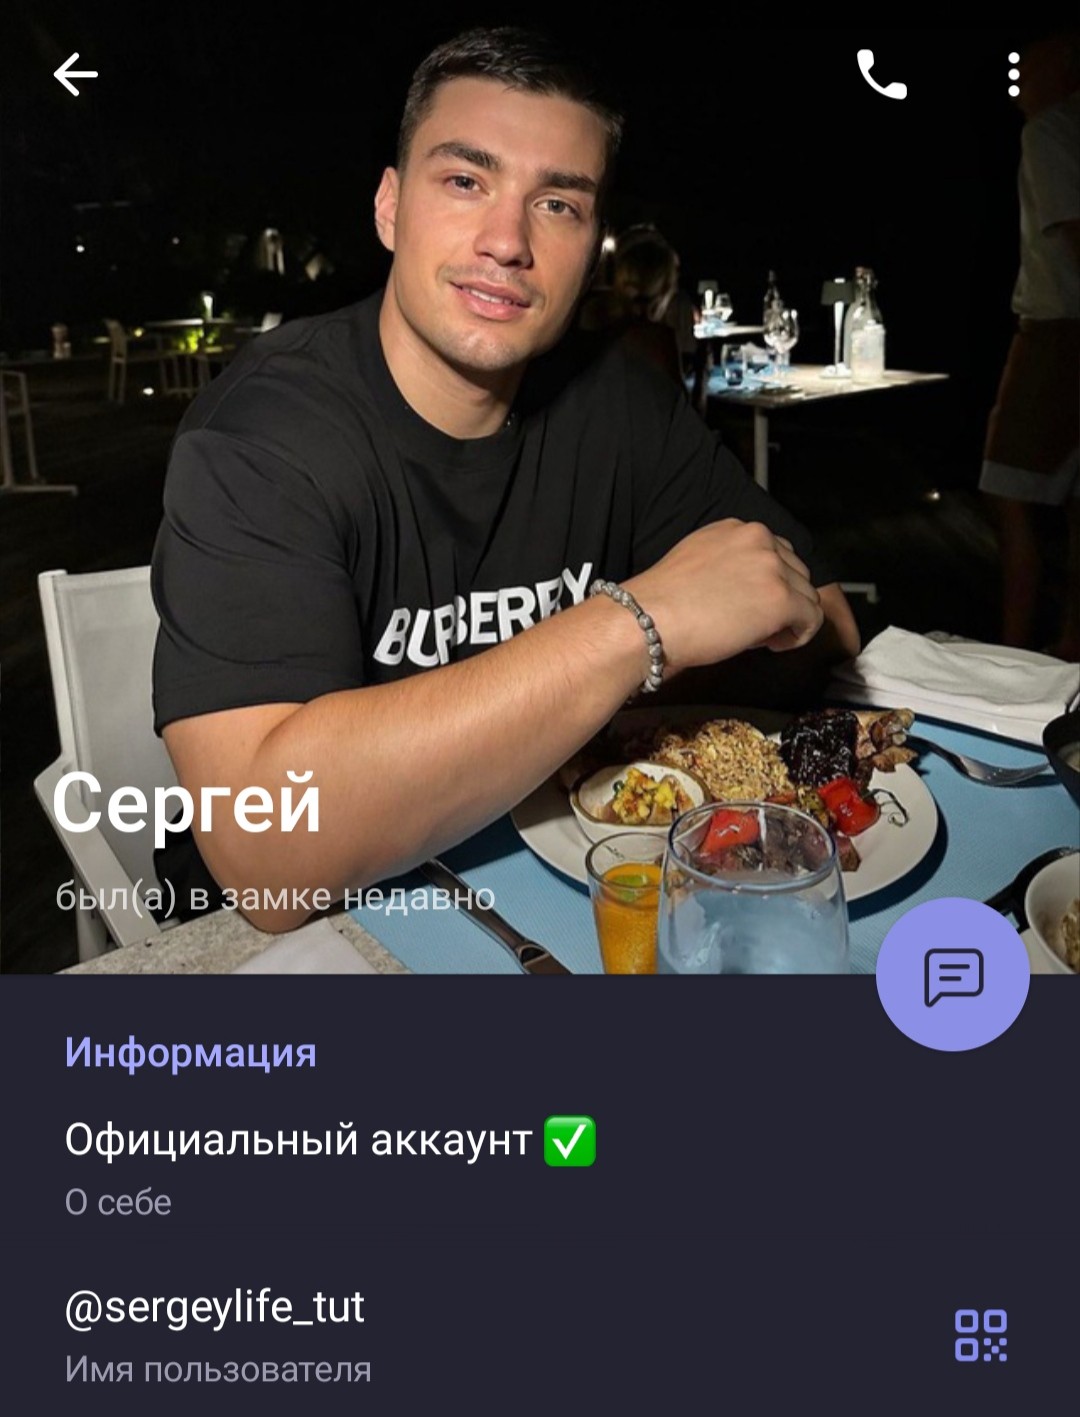 Sergeylife Tut обзор проекта